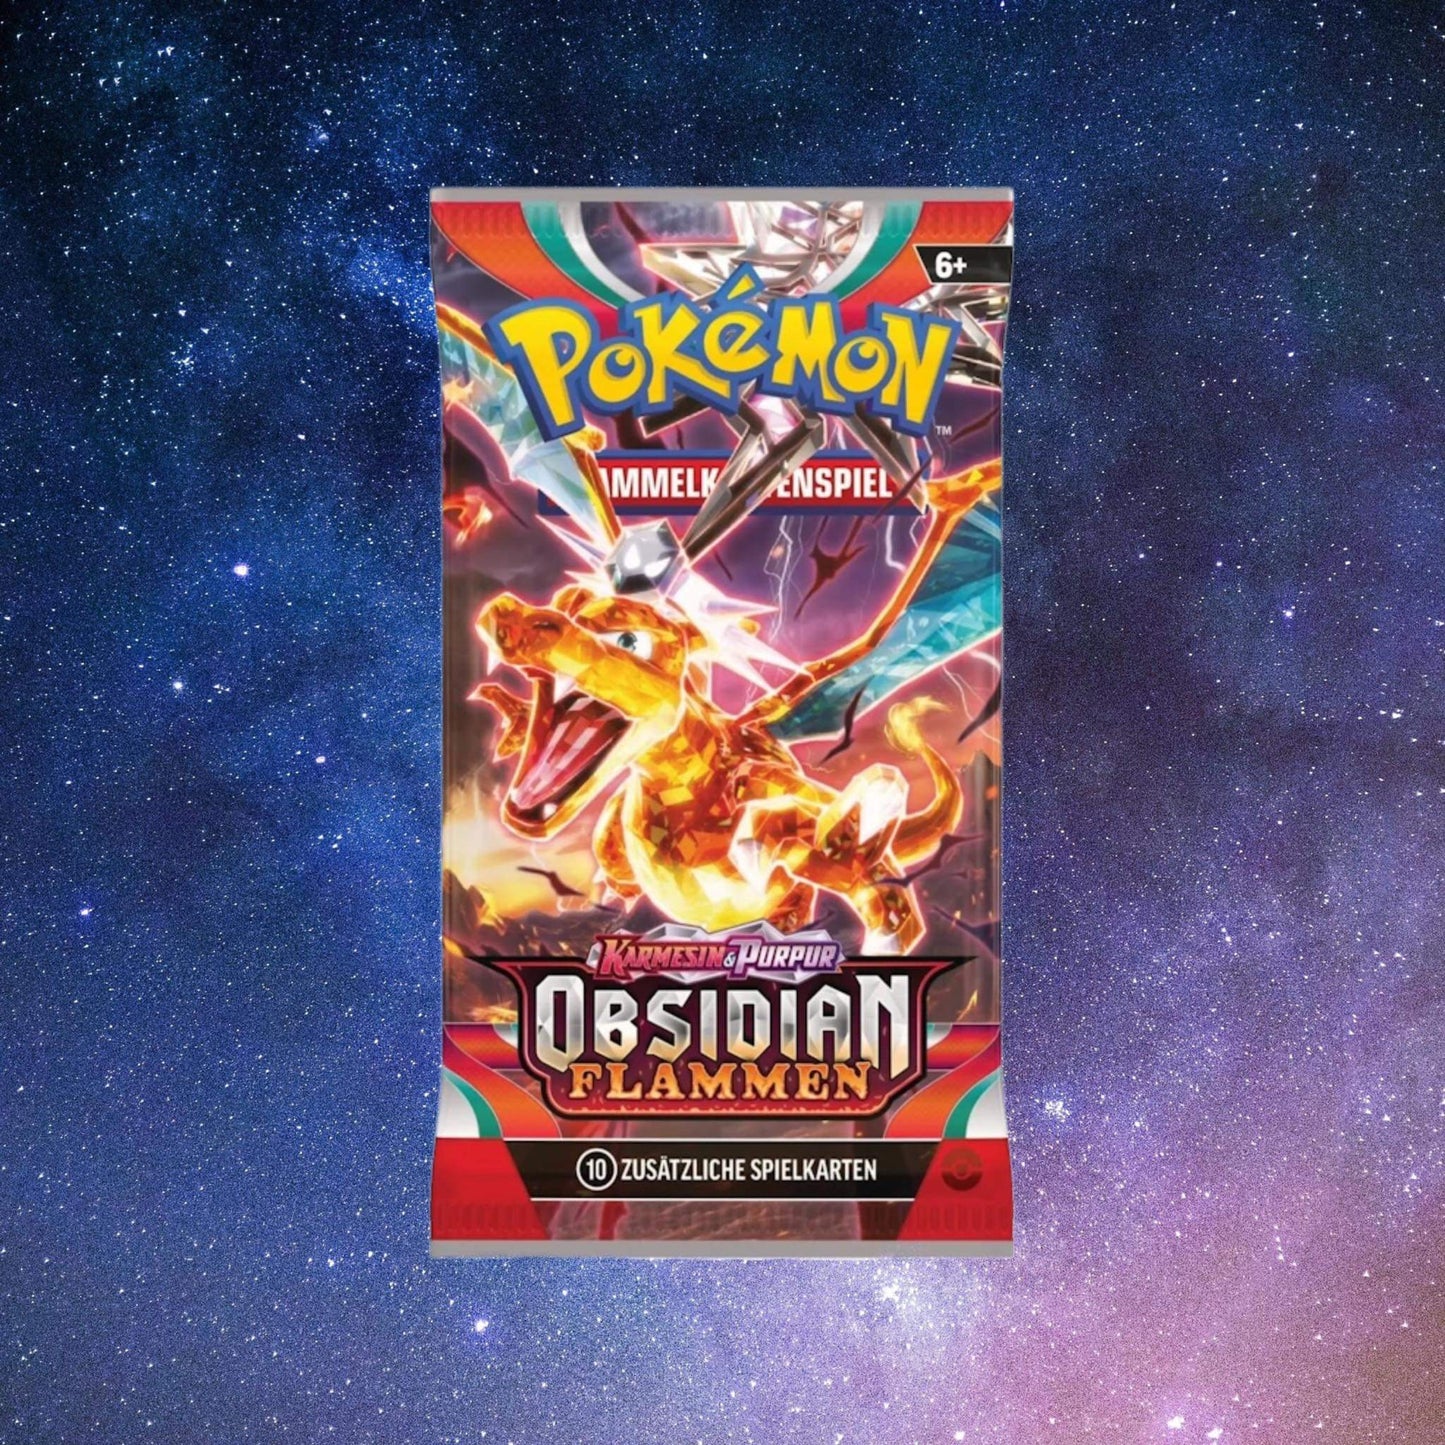 NEU! Pokémon Obsidianflammen Einzelbooster DE OVP